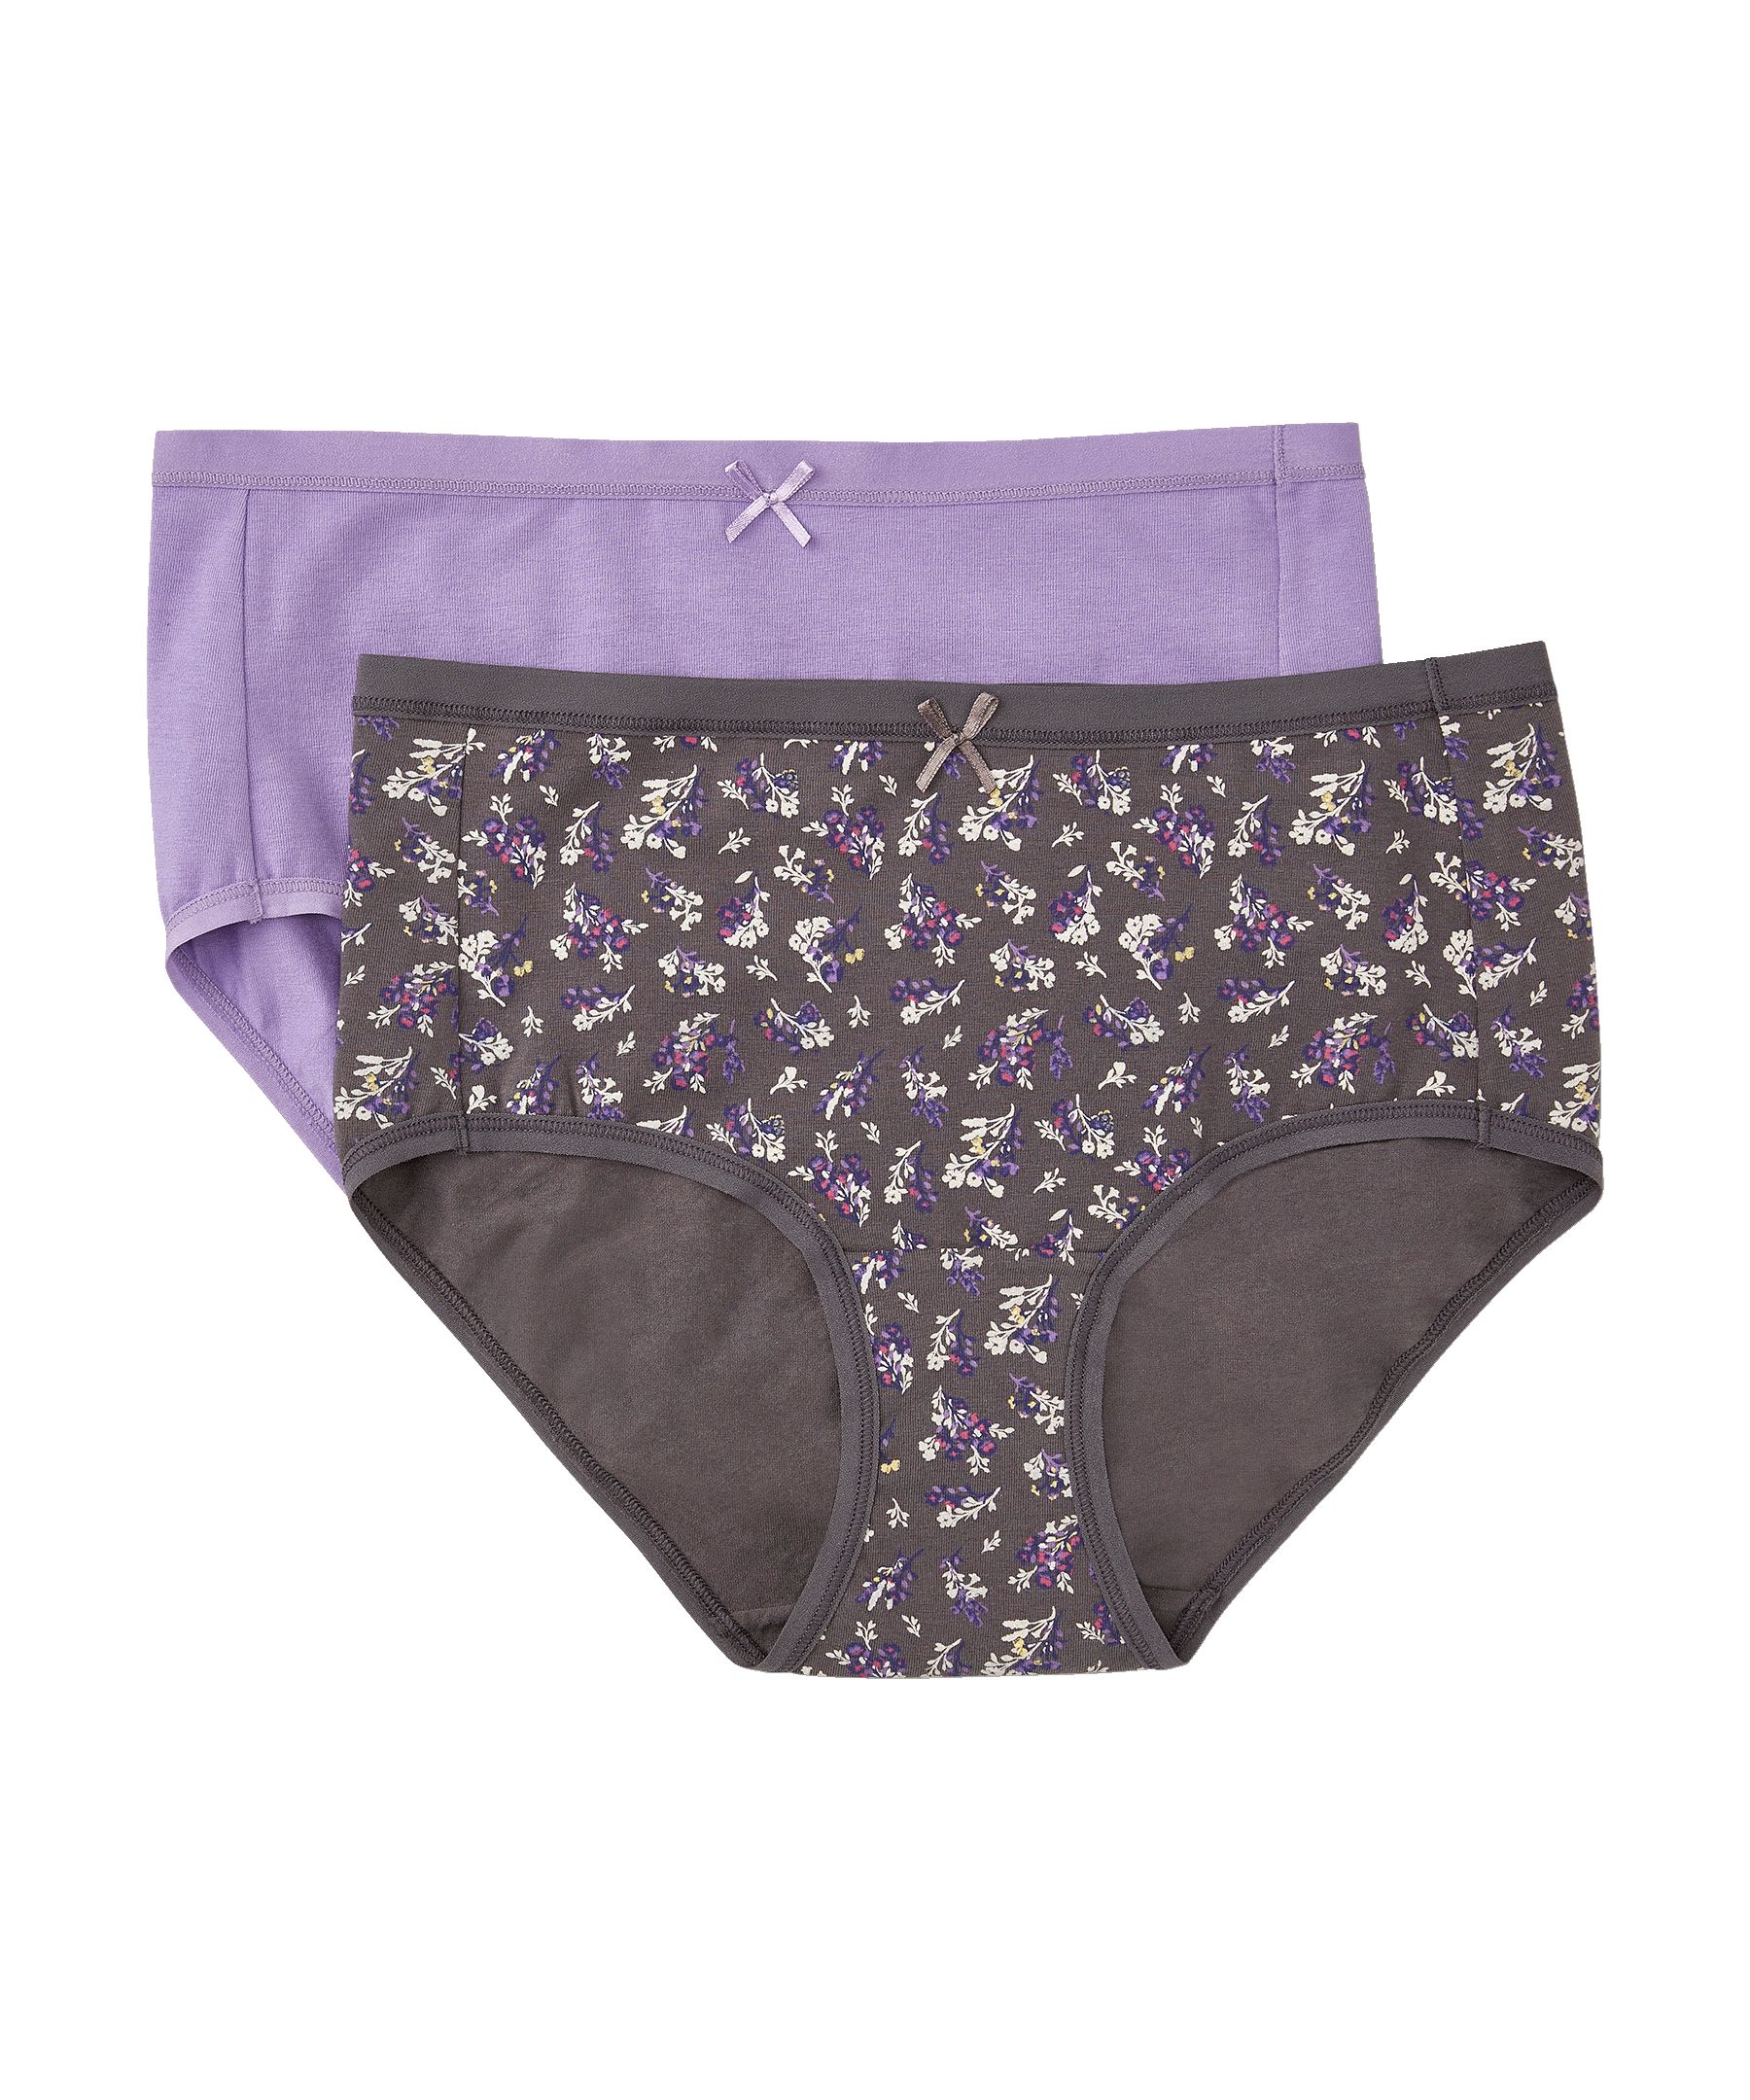 3,5,7 Pack Womens Briefs Lady Underwear Cotton Panties Assorted Colors  Prints